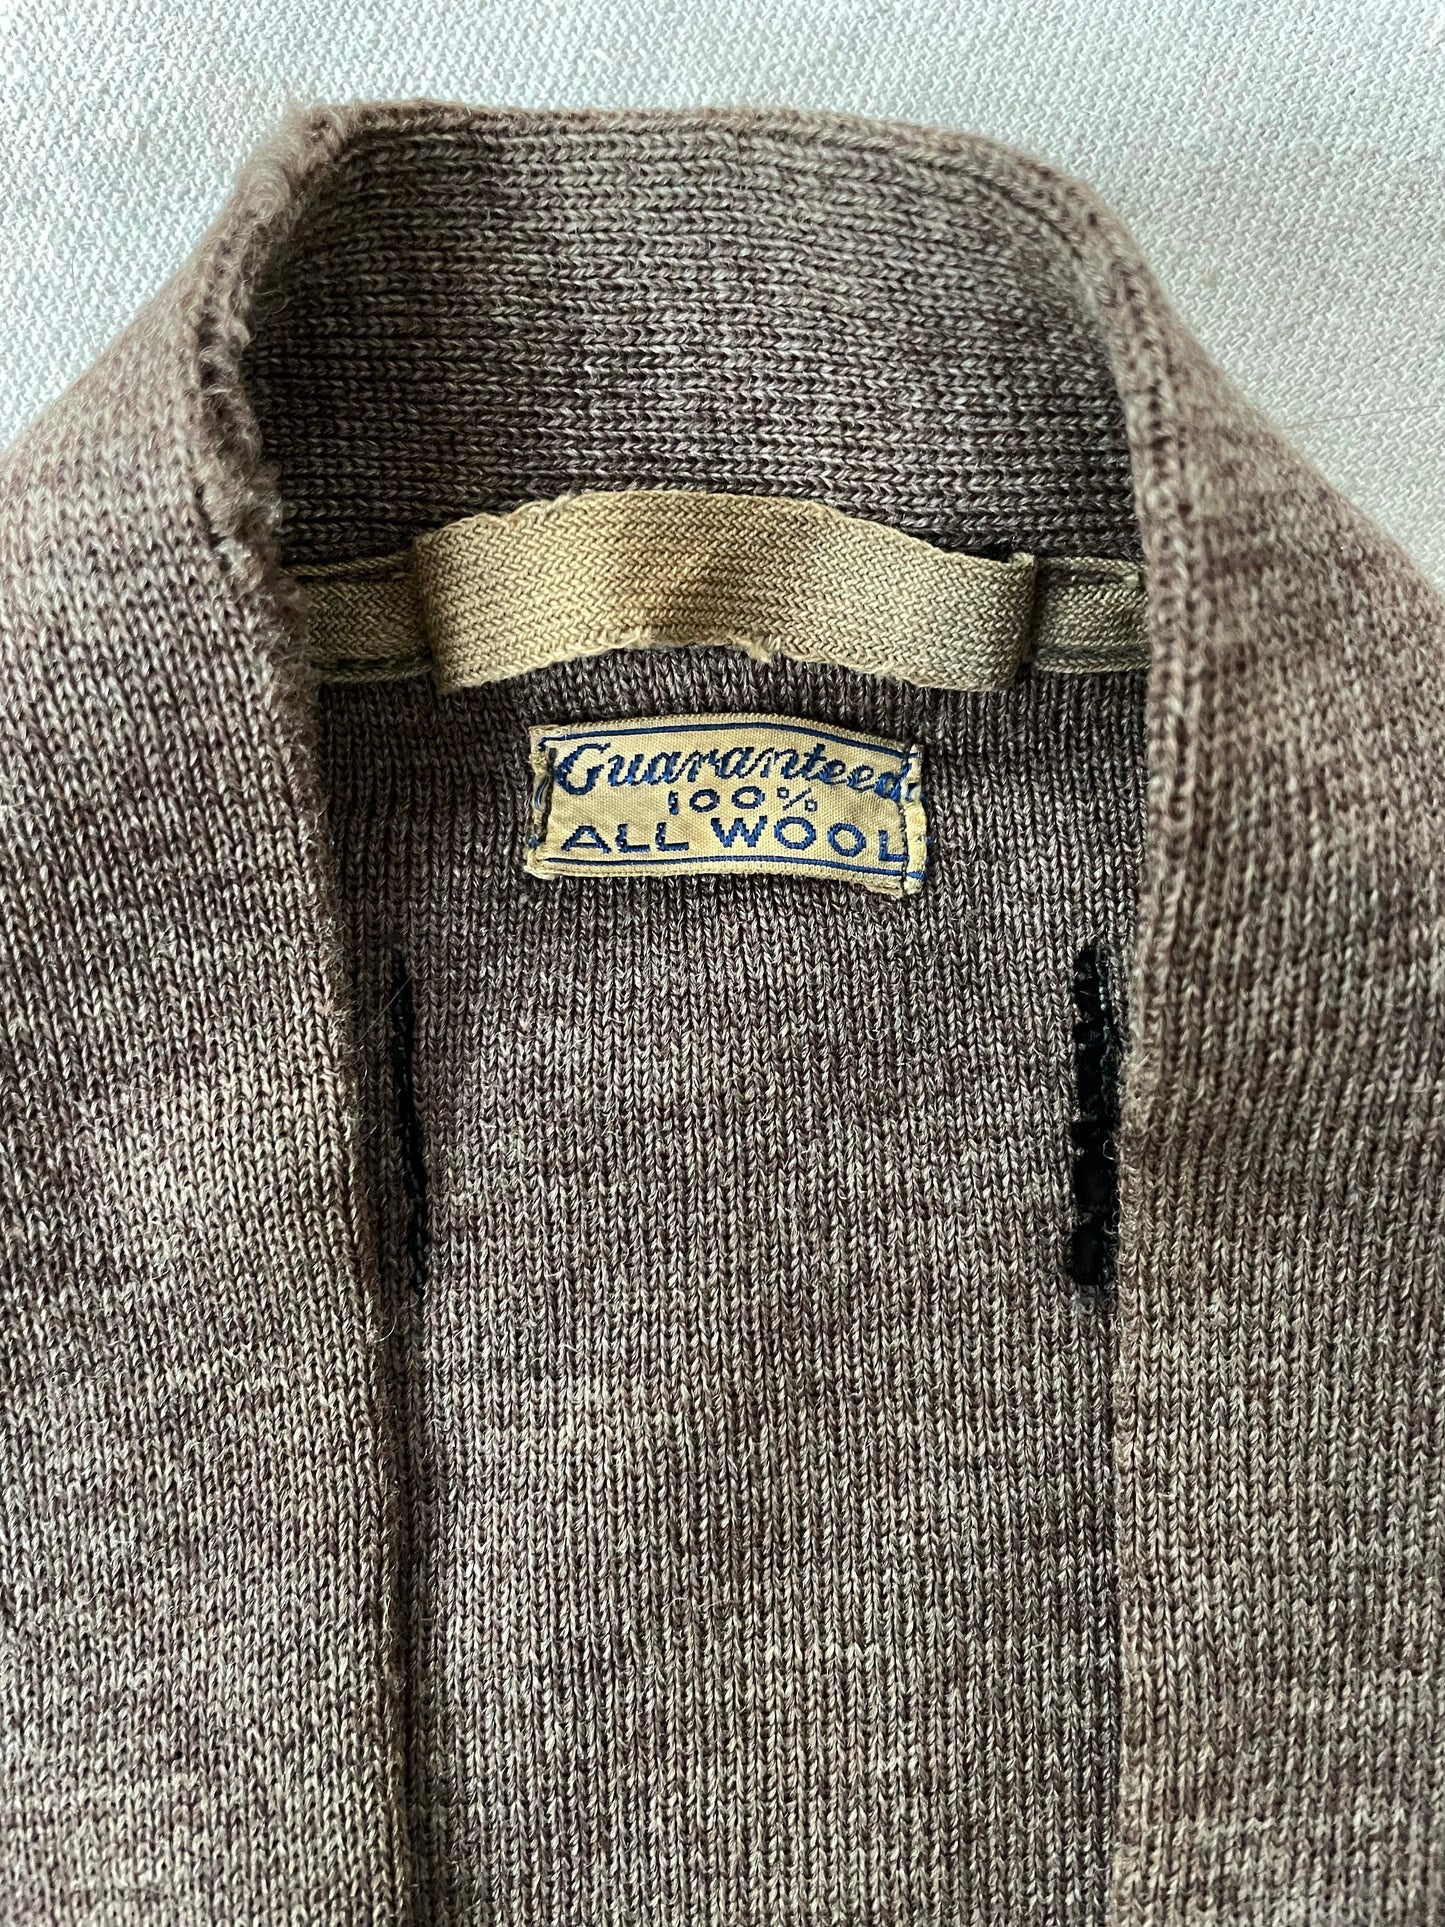 30s Athletic Cardigan Sweater